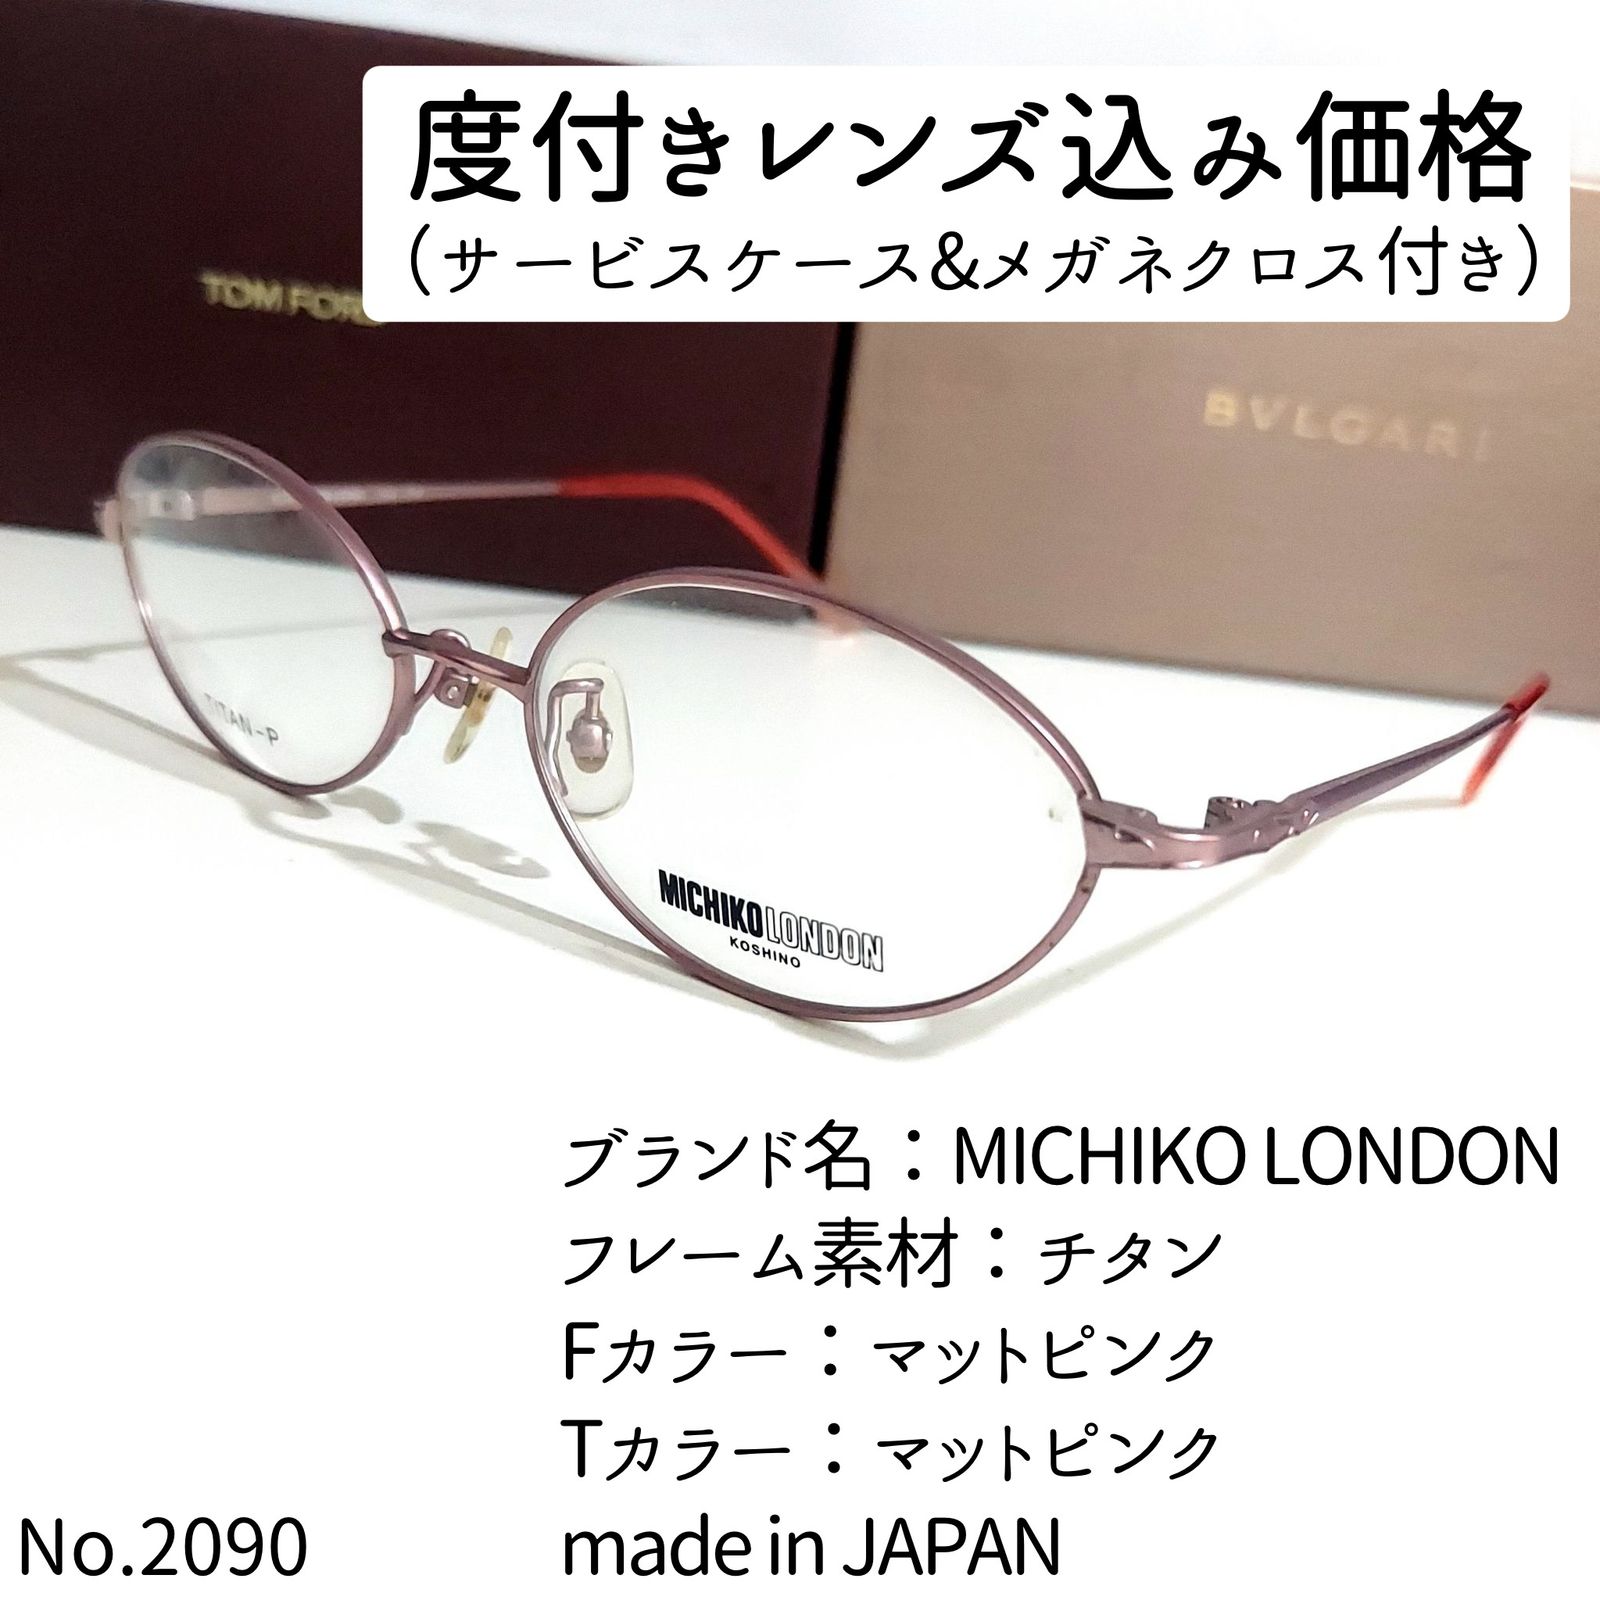 No.2090+メガネ MICHIKO LONDON【度数入り込み価格】-